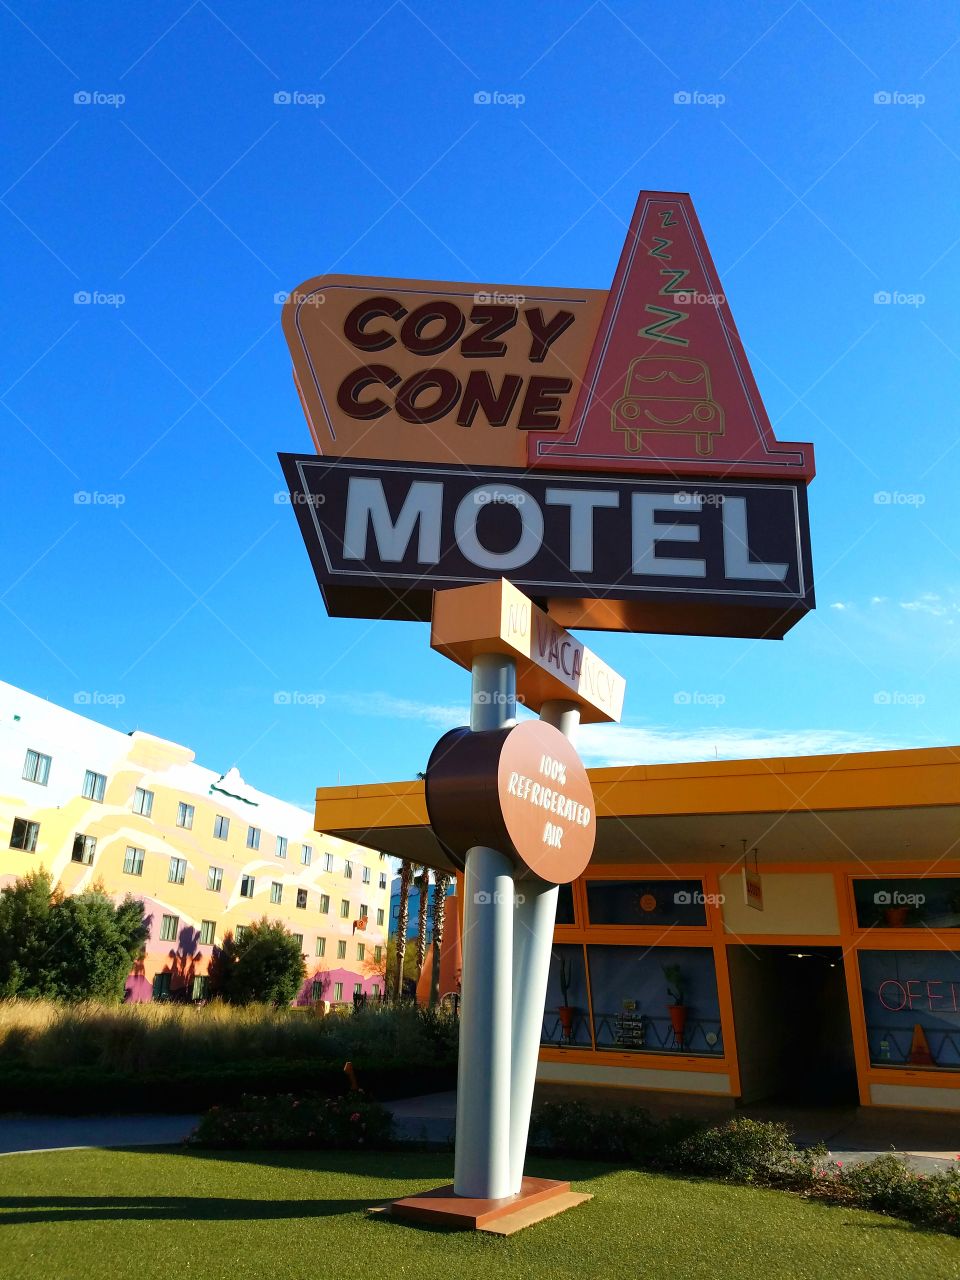 Cozy Cone Motel signage at Disney's Art of Animation resort